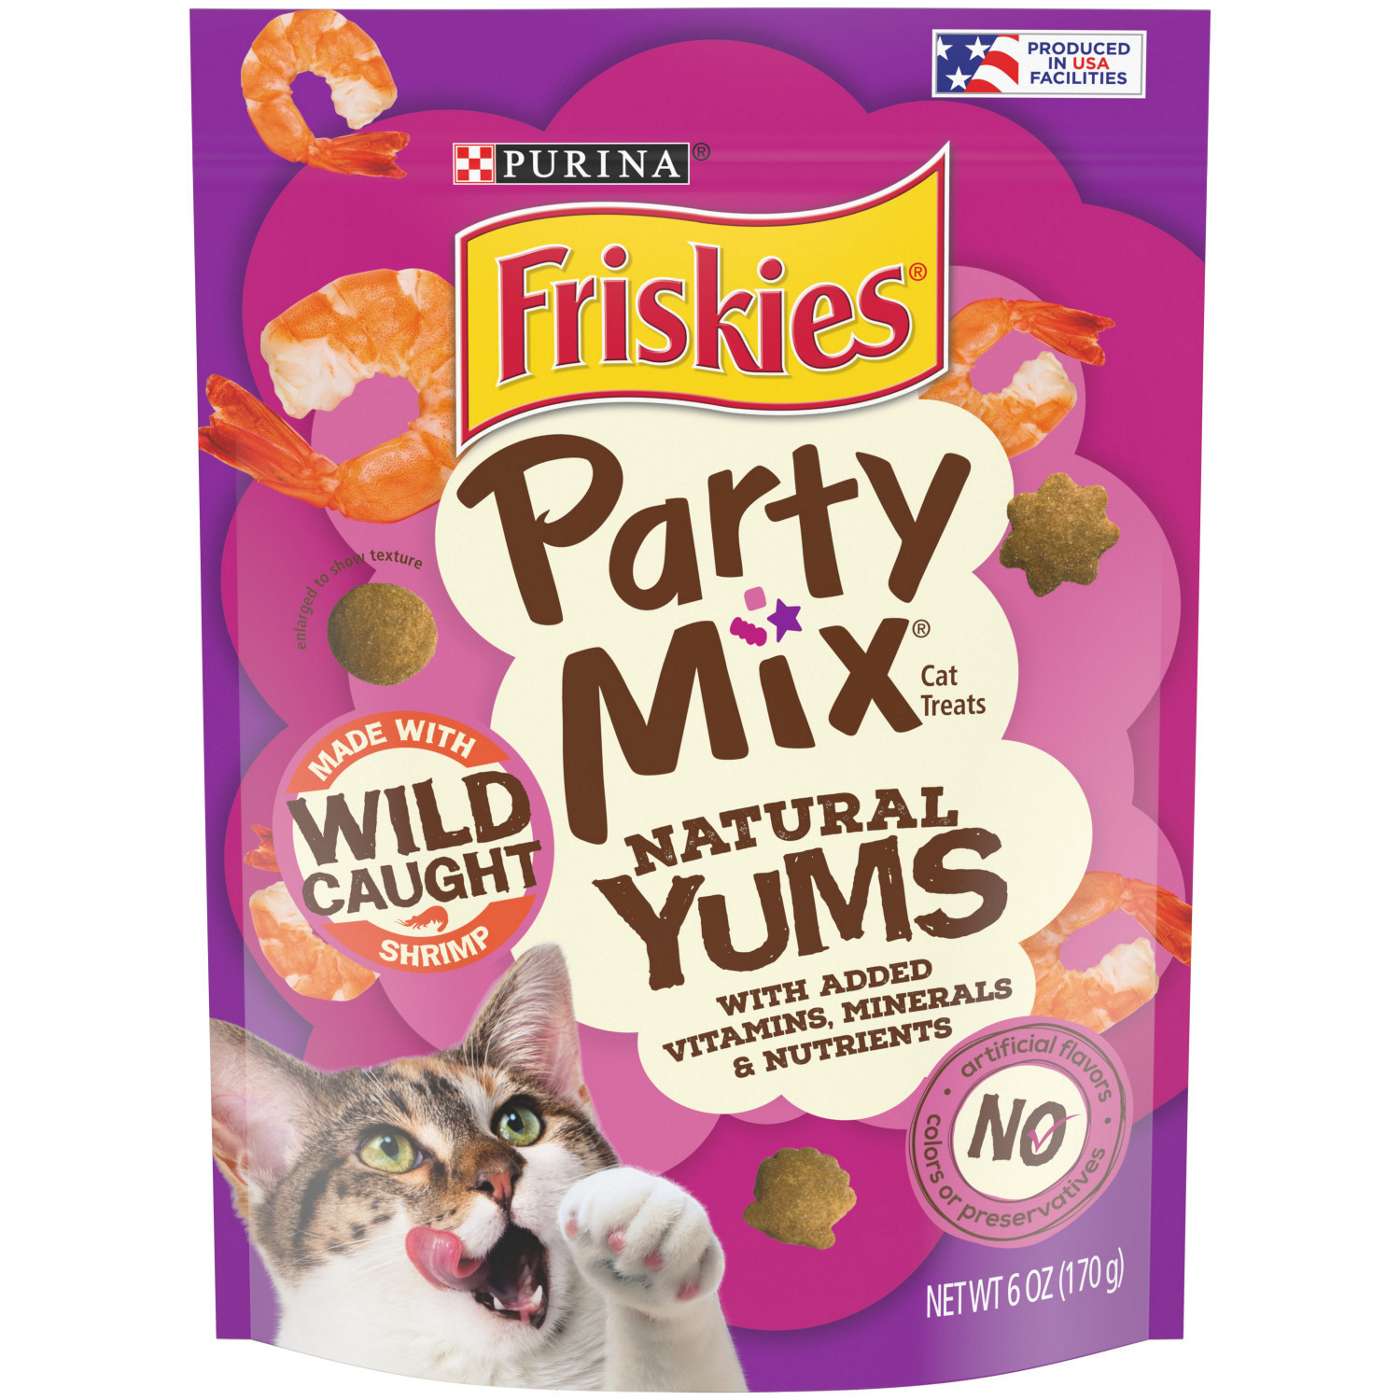 Friskies Purina Friskies Party Mix Cat Treats, Natural Yums With Wild Shrimp; image 1 of 2